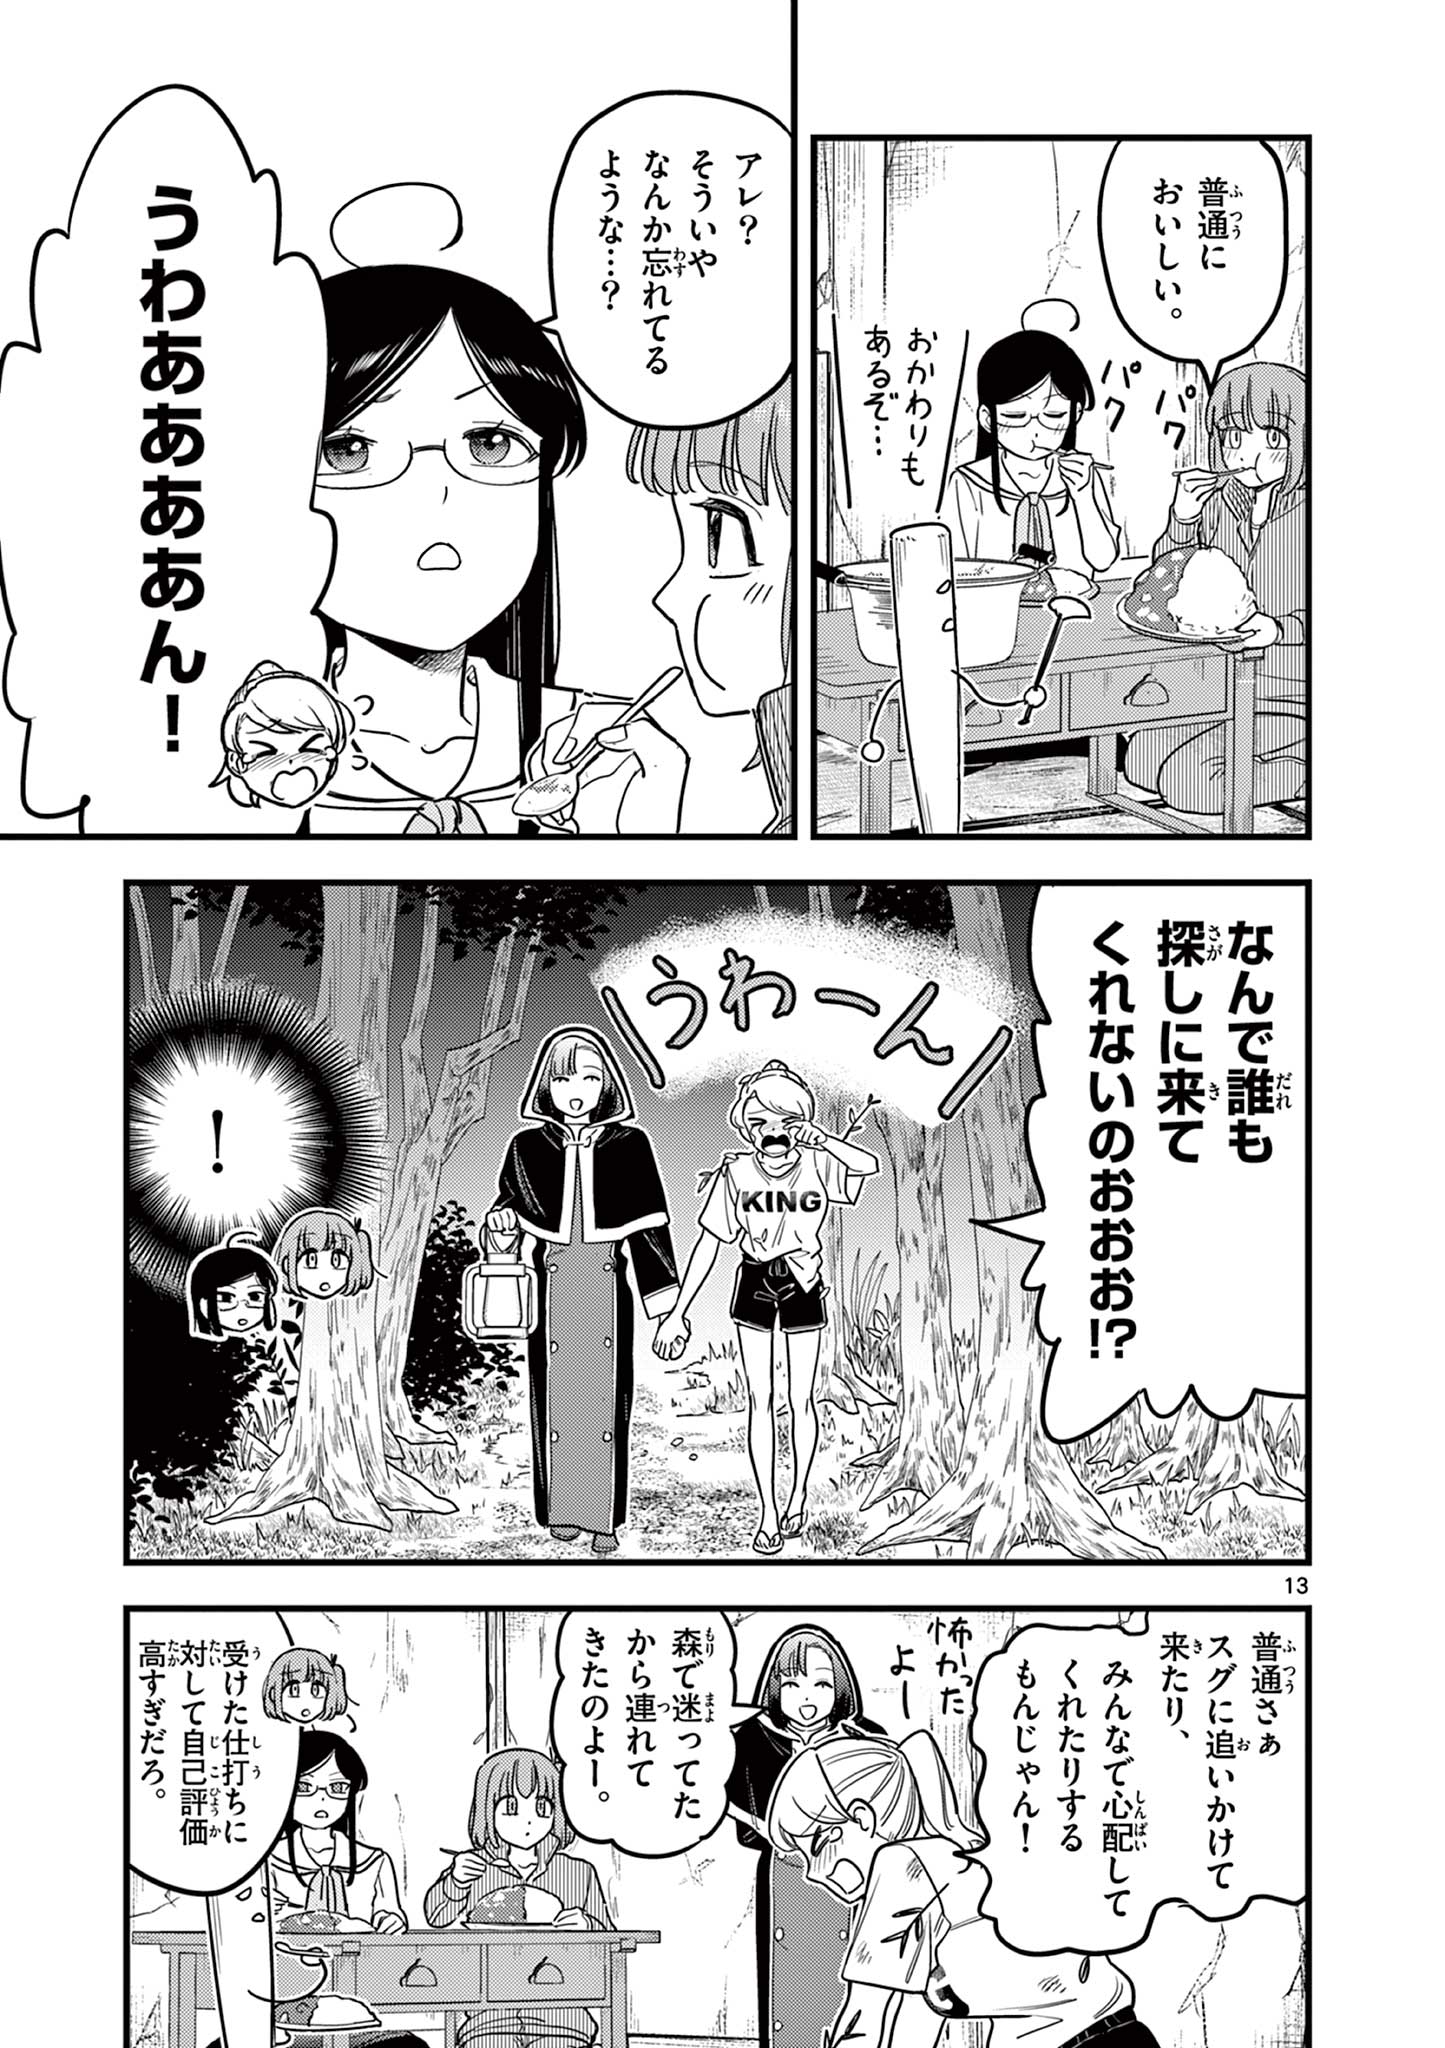 Kuro Mahou Ryou no Sanakunin - Chapter 12 - Page 13